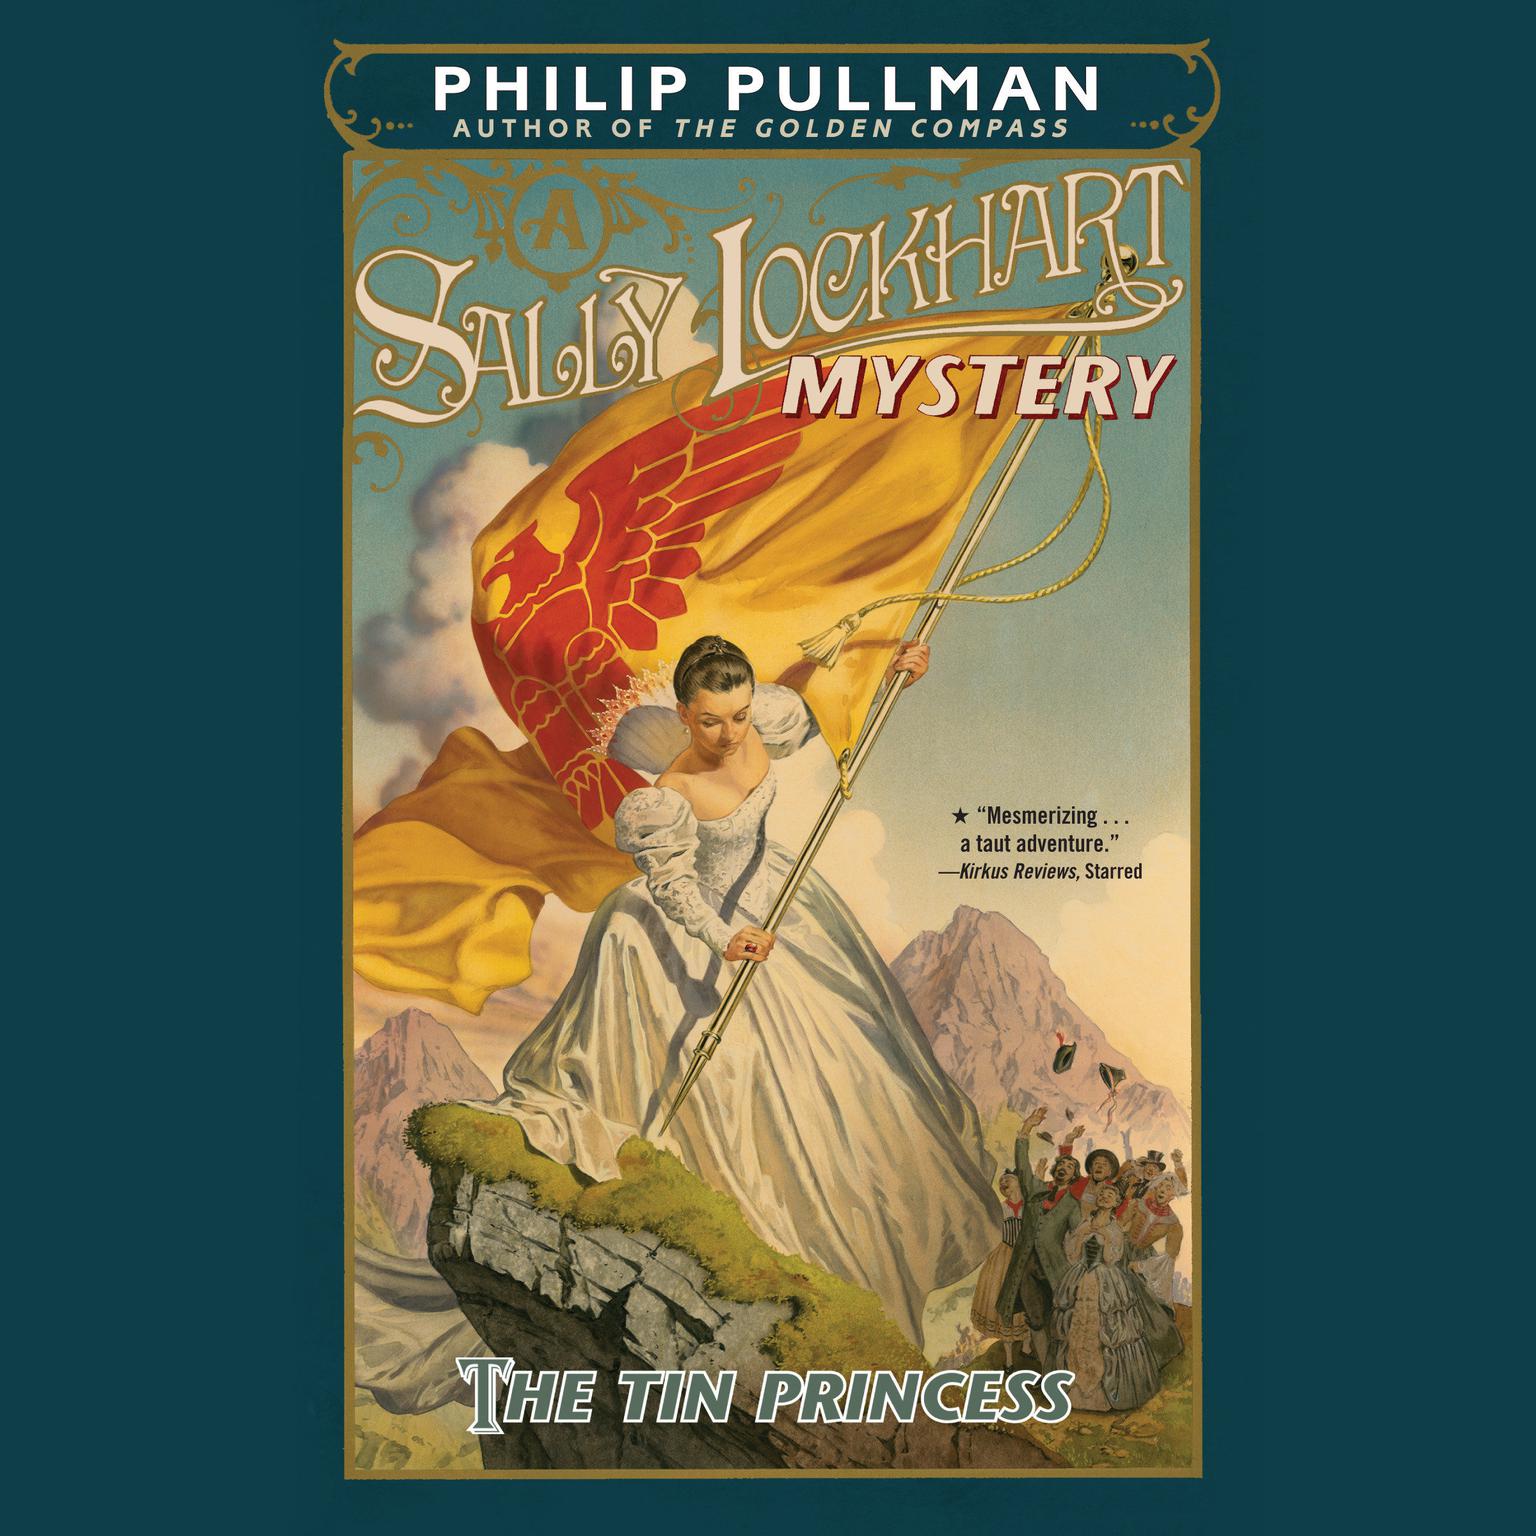 The Tin Princess: A Sally Lockhart Mystery: Book Four Audiobook, by Philip Pullman